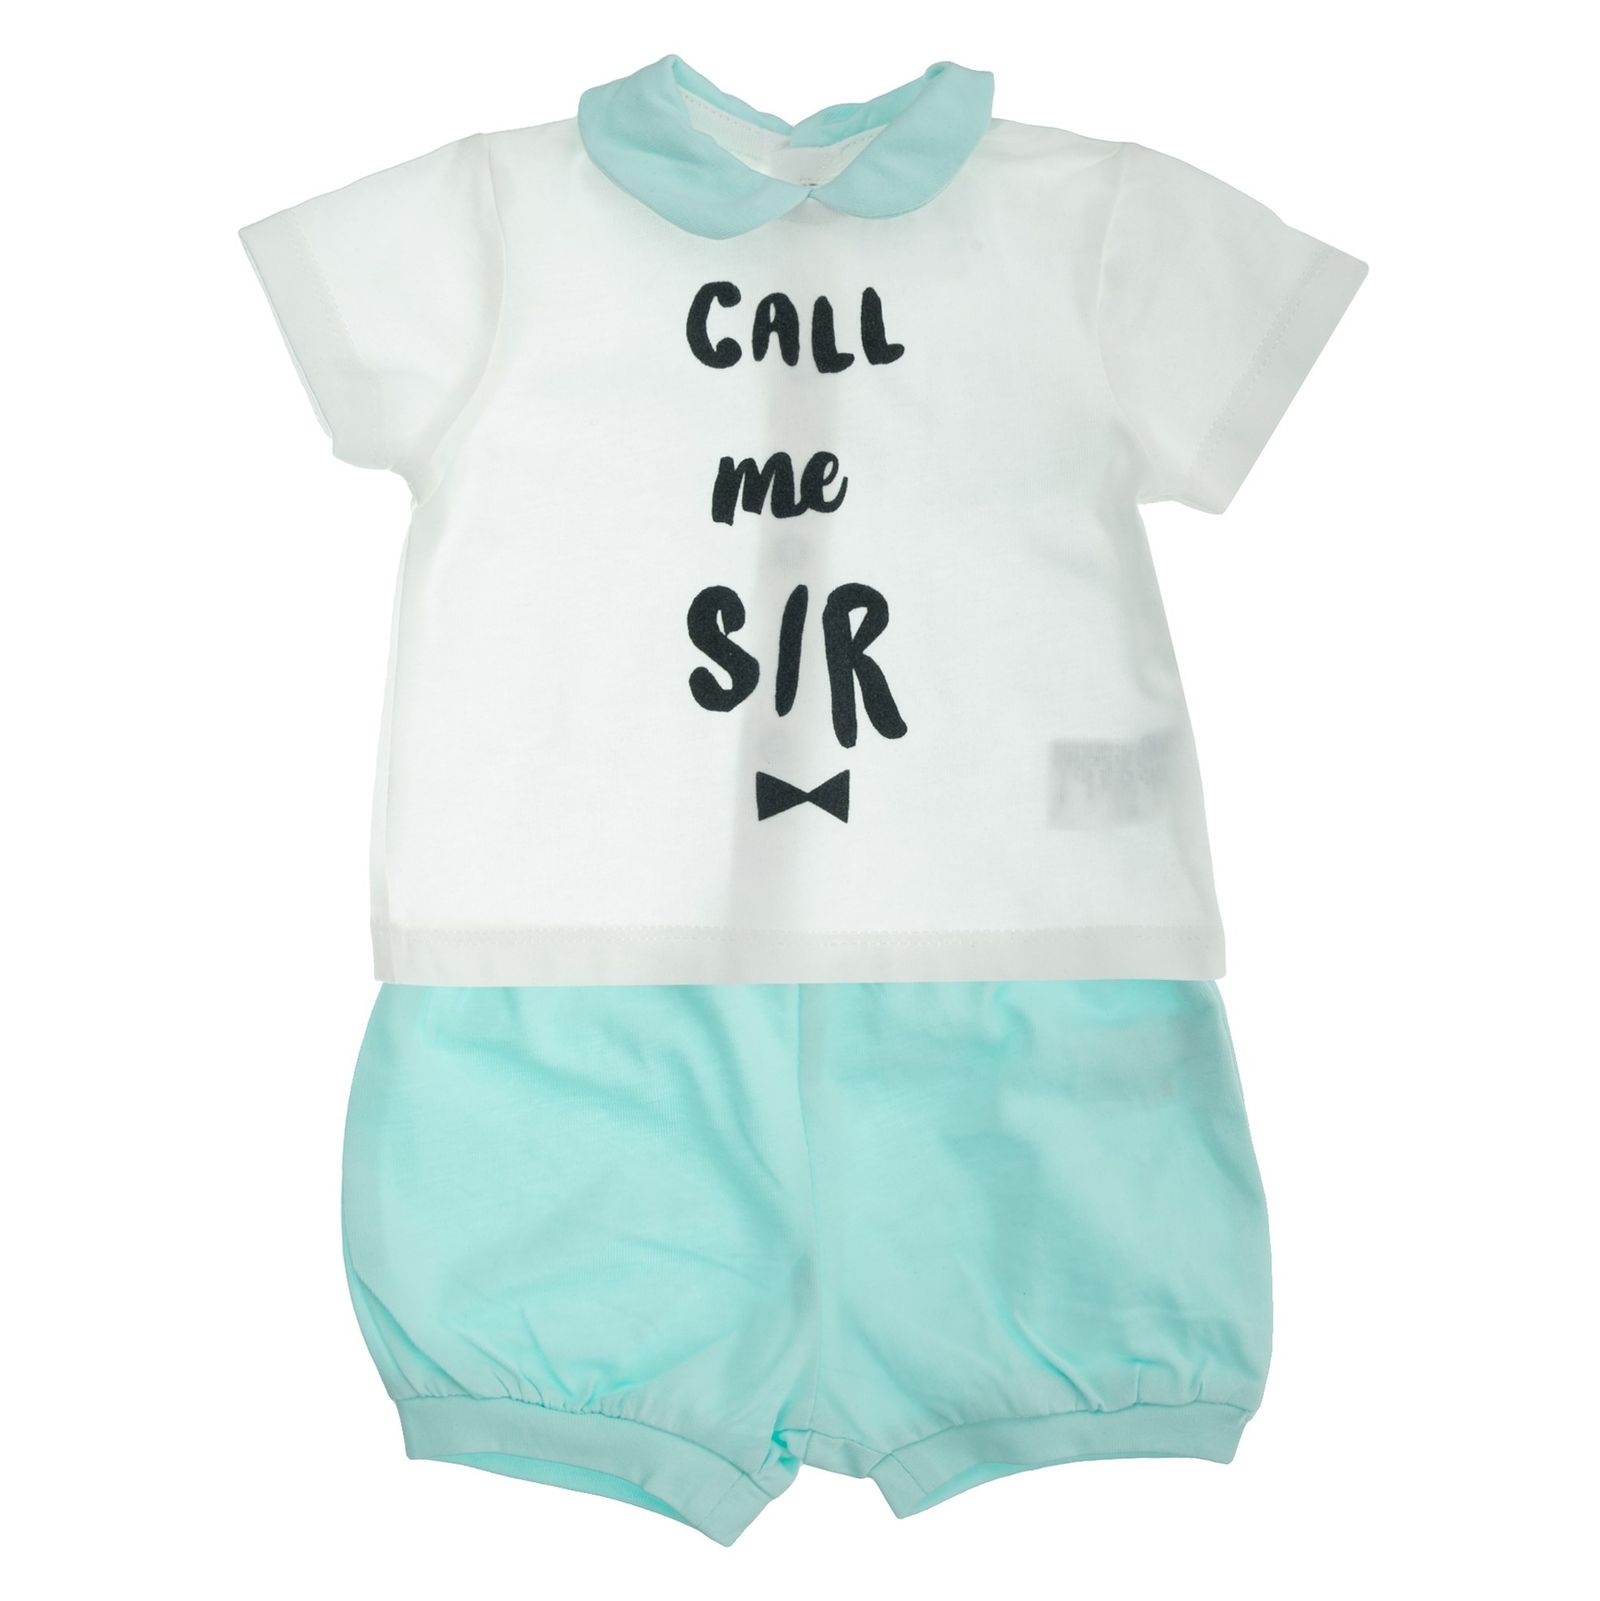 تی شرت و شلوارک نخی نوزادی پسرانه - بلوکیدز - سفيد و آبي - 1